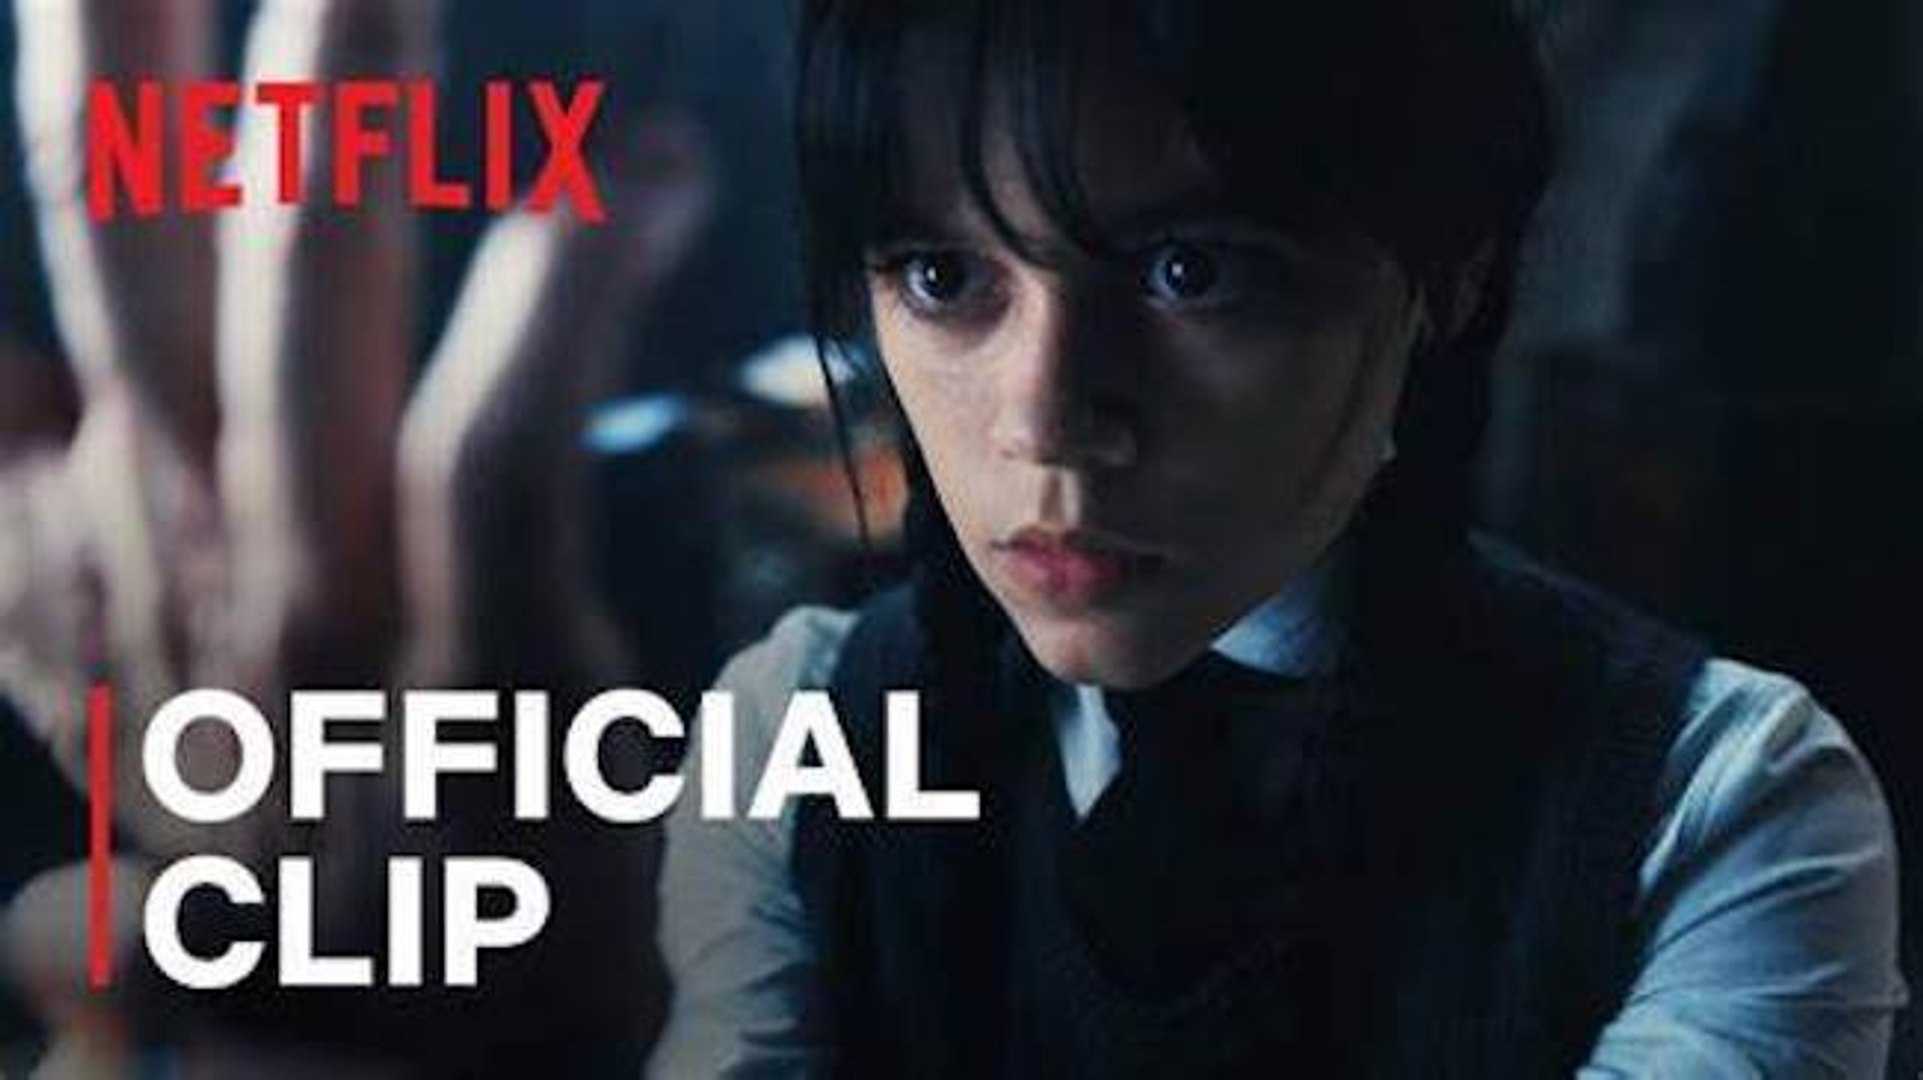 Wednesday Addams - SEASON 2 FULL TEASER TRAILER - Netflix (HD) - video  Dailymotion